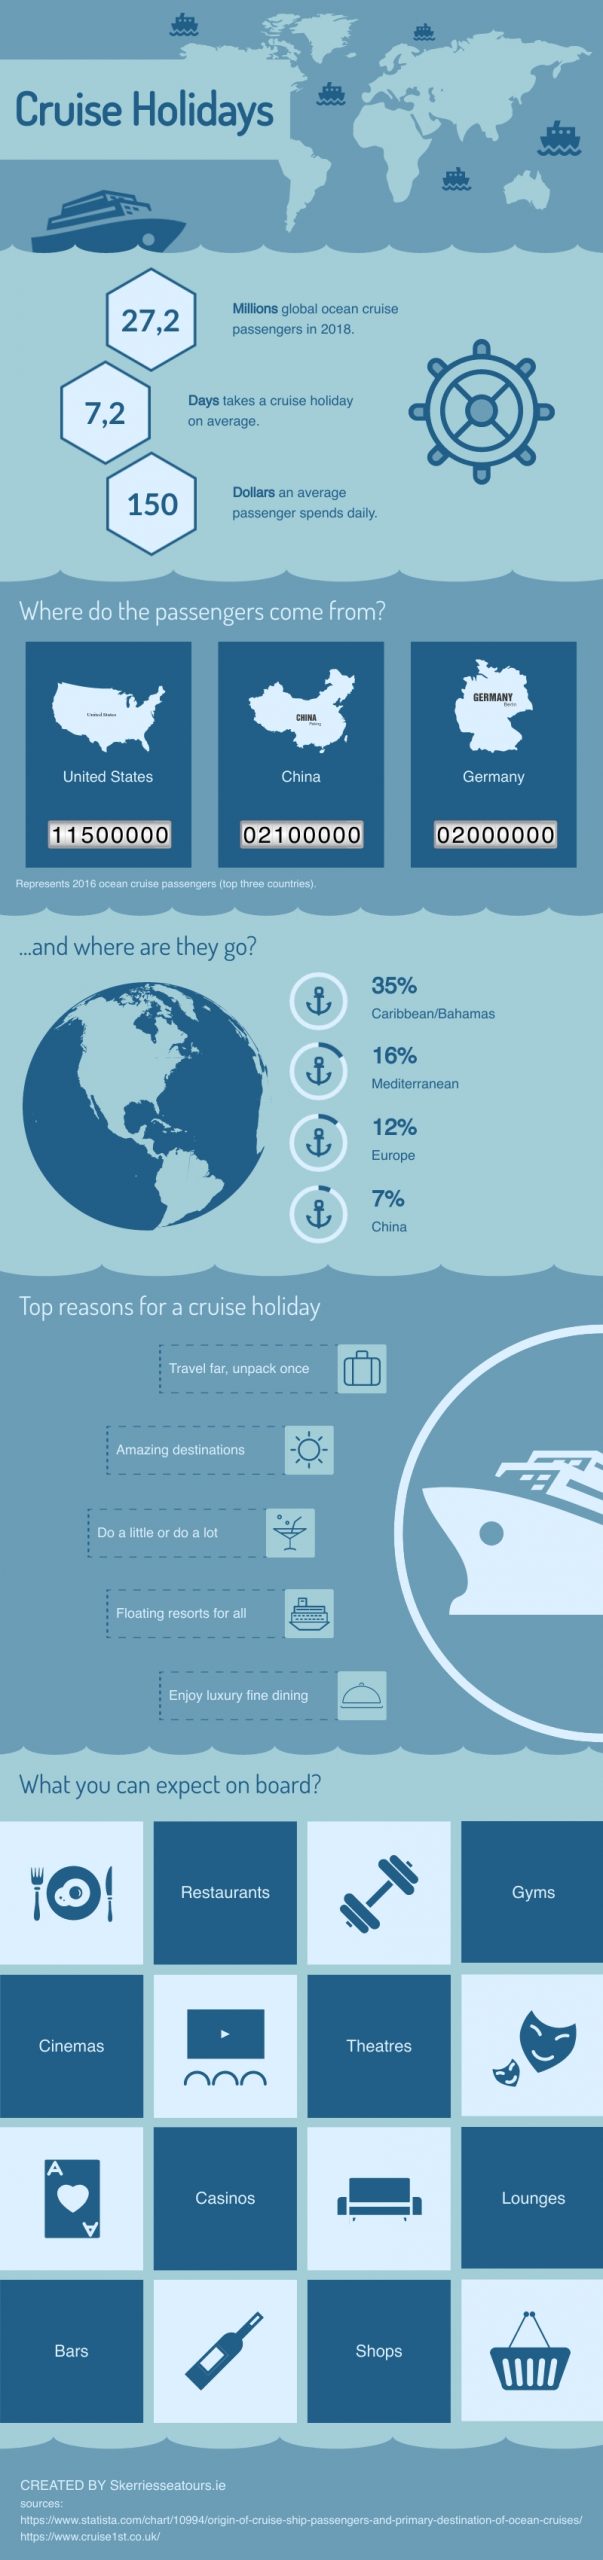 Cruise Holidays infographic